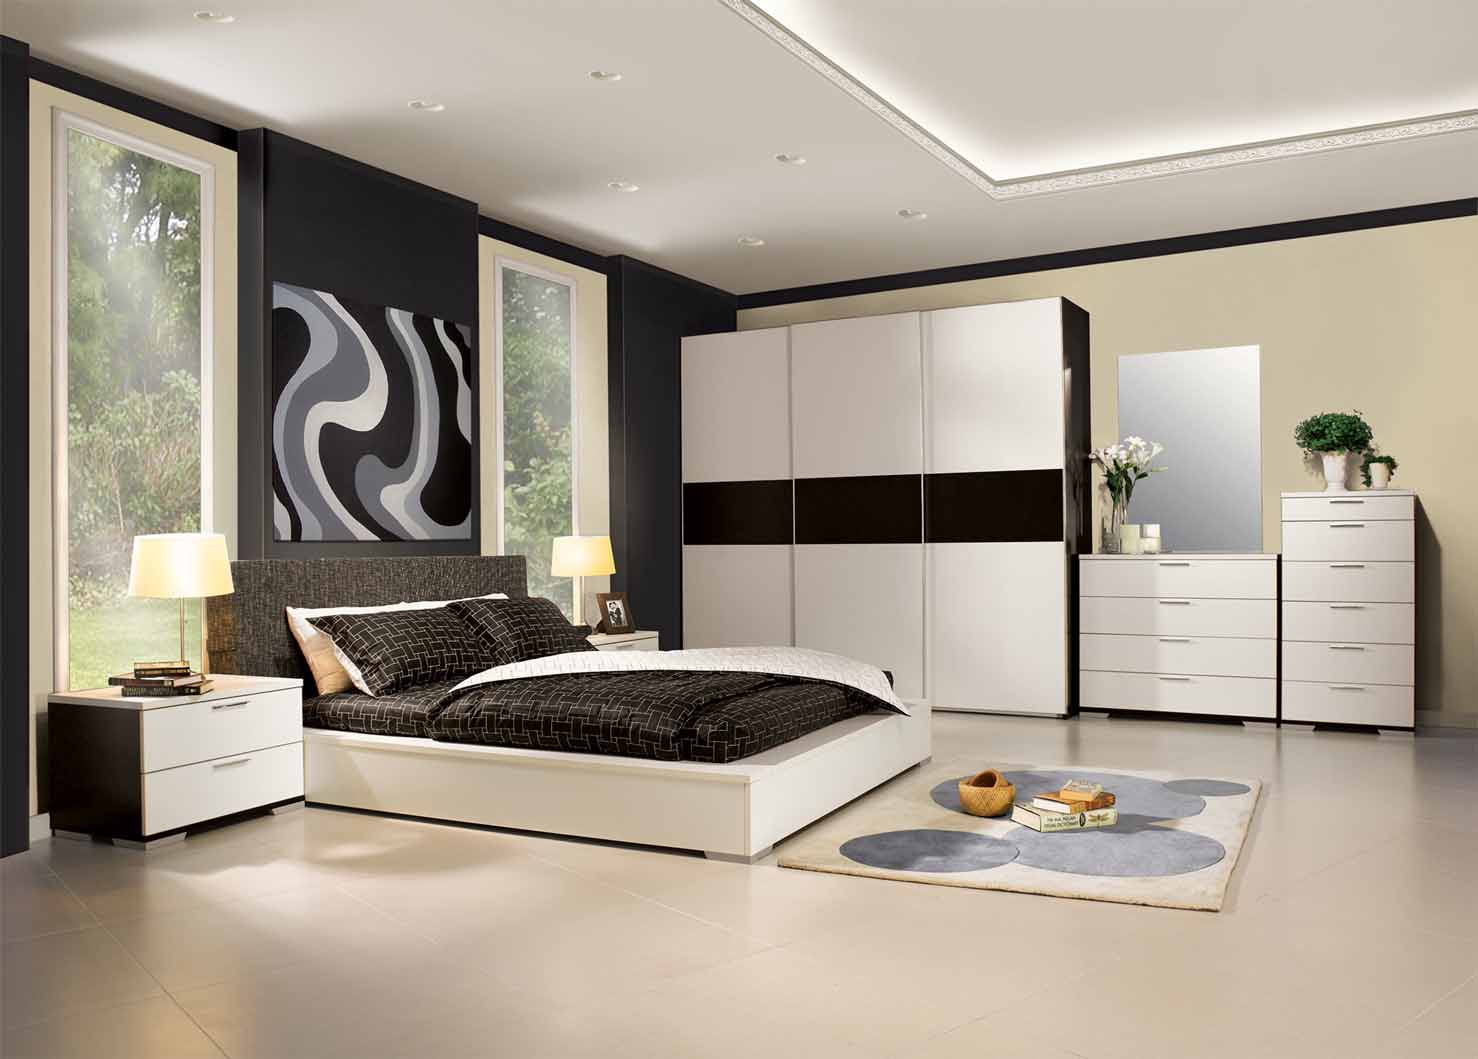 Home Interior Designs: Modern Bedroom Ideas